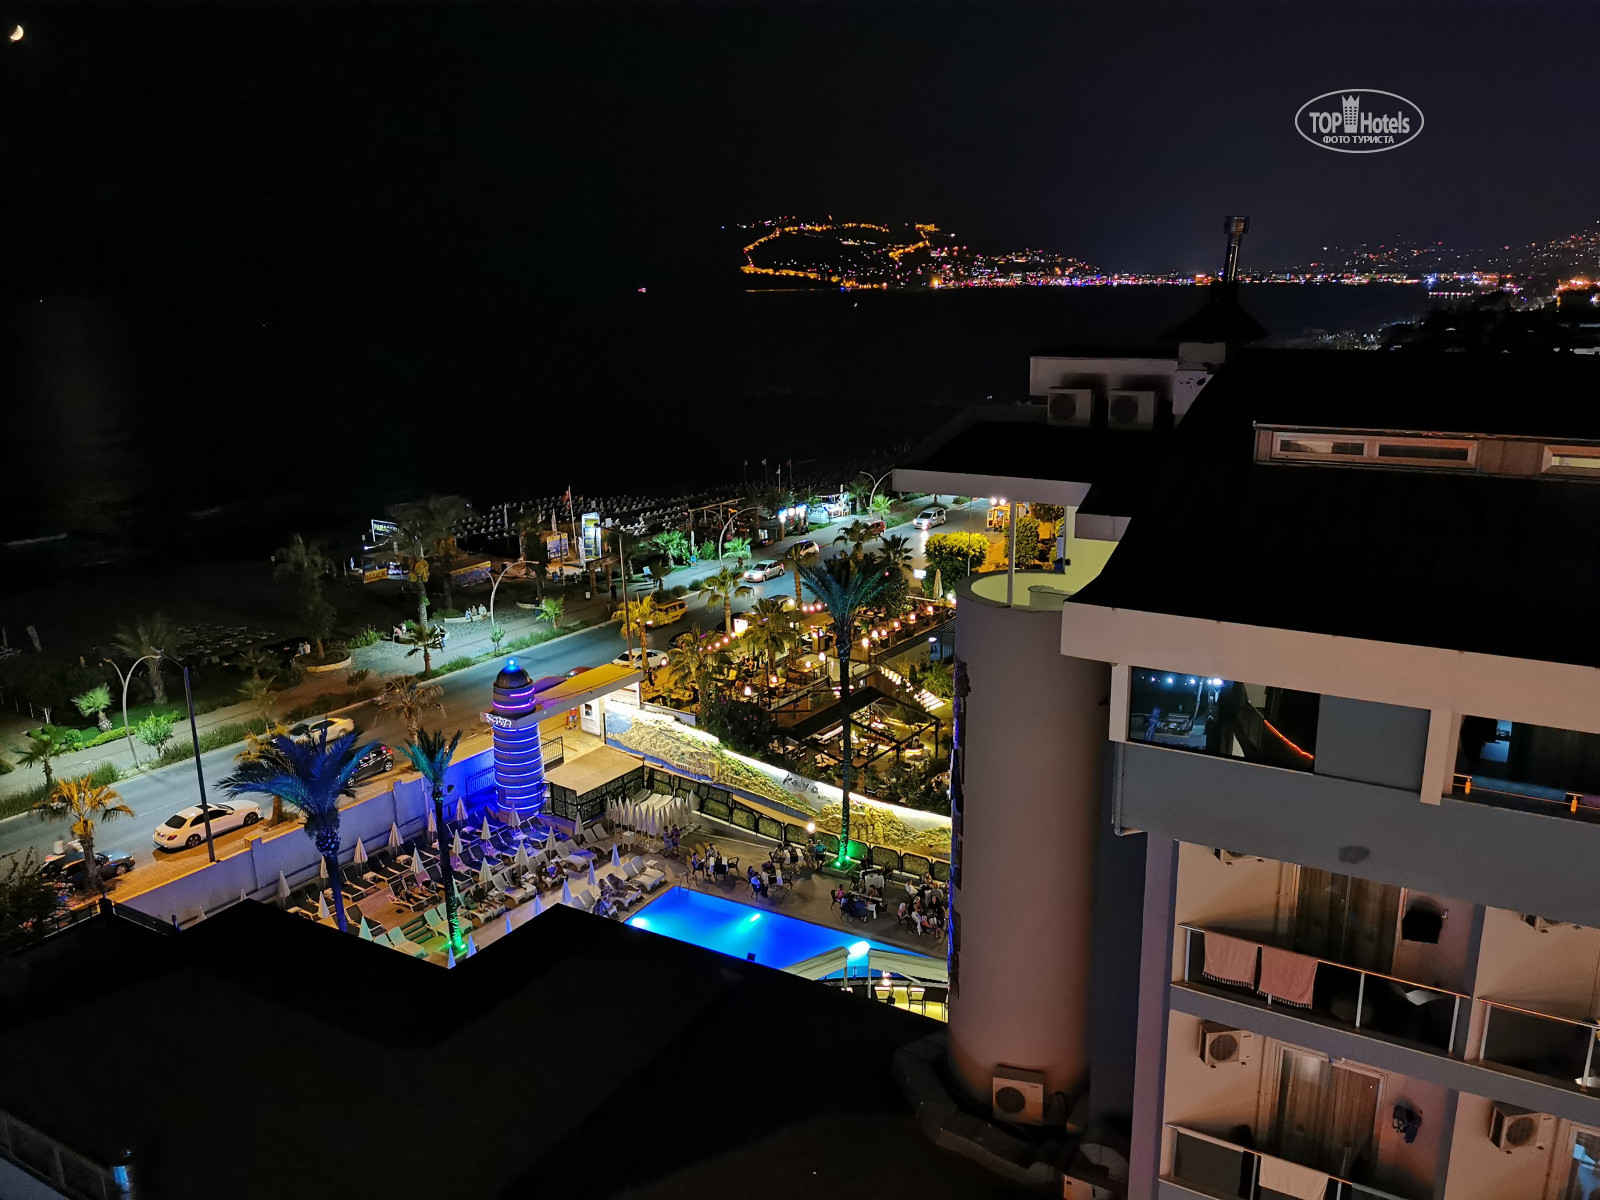 Asia турция. Asia Beach Resort Spa Hotel 5. Отель в Турции Азия Бич Резорт 5 звезд. Турция пляж. Asia Beach Resort Spa 5 пляж.